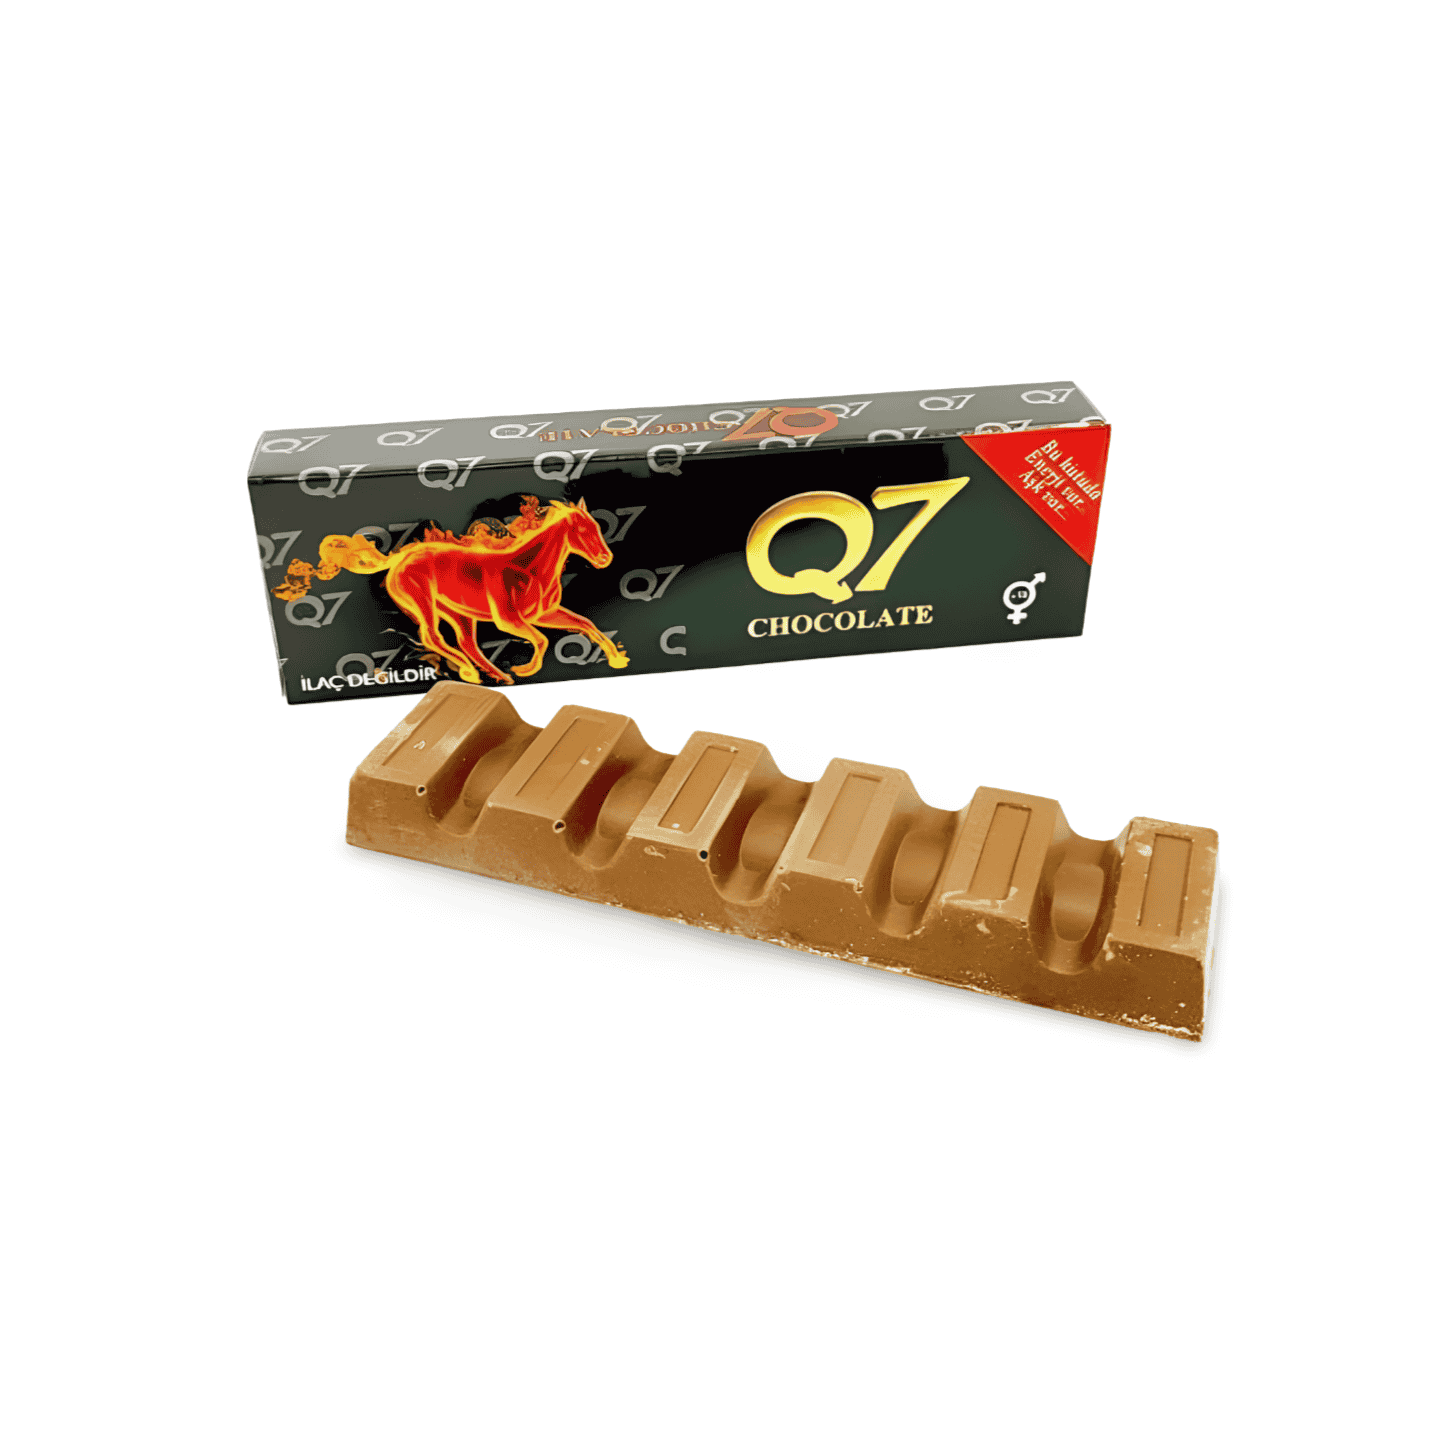 Q7 Chocolate